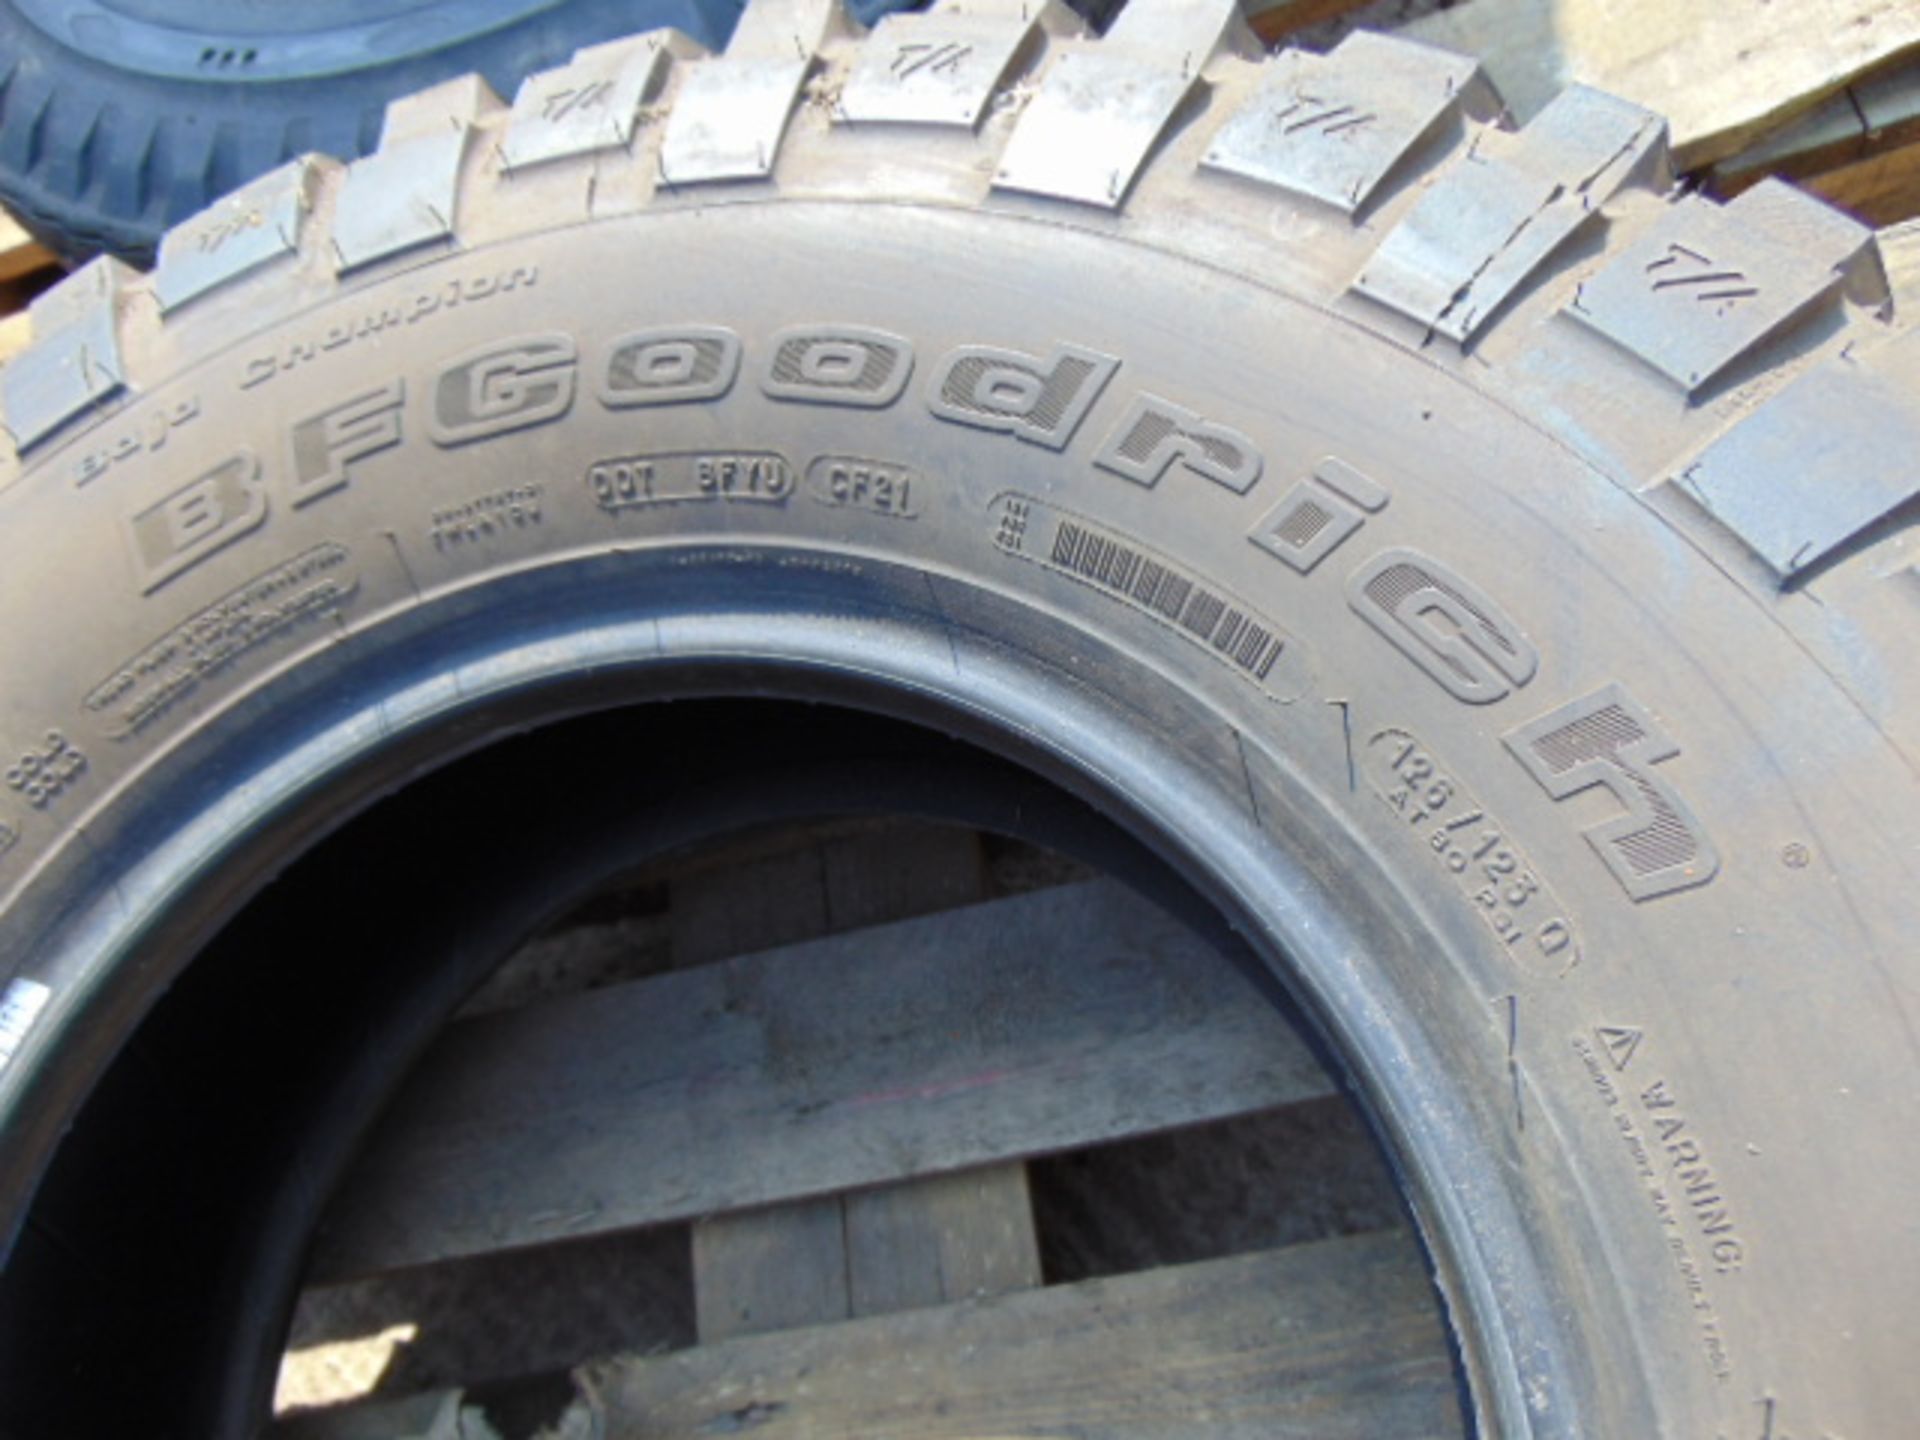 1 x BF Goodrich Mud-Terrain LT285/75 R16 Tyre - Image 4 of 6